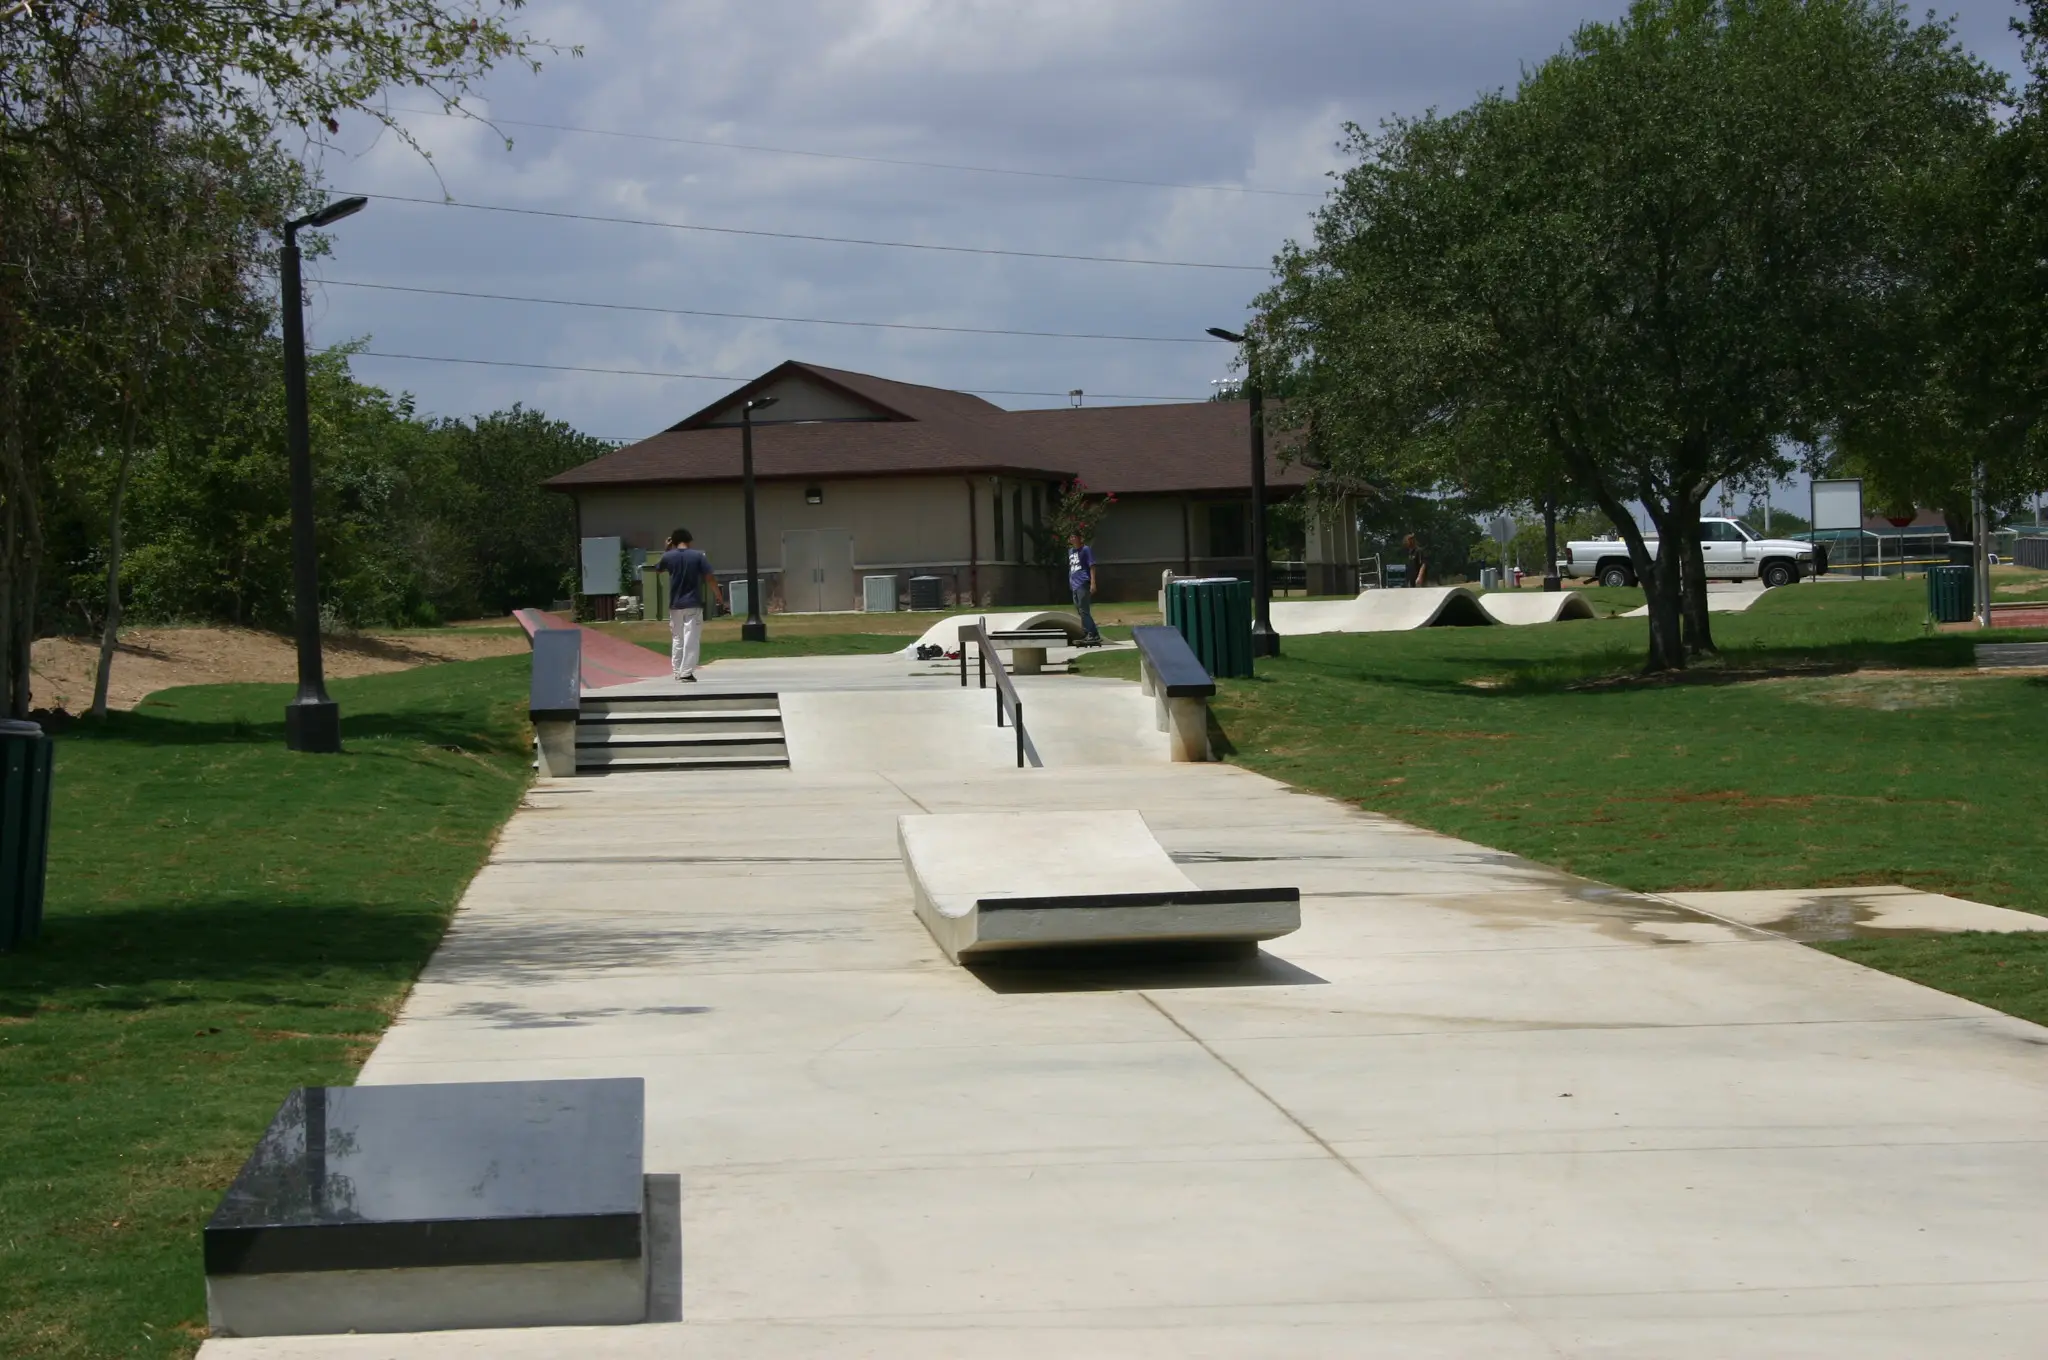 SPA Skateparks - College Station Texas - Plaza lane